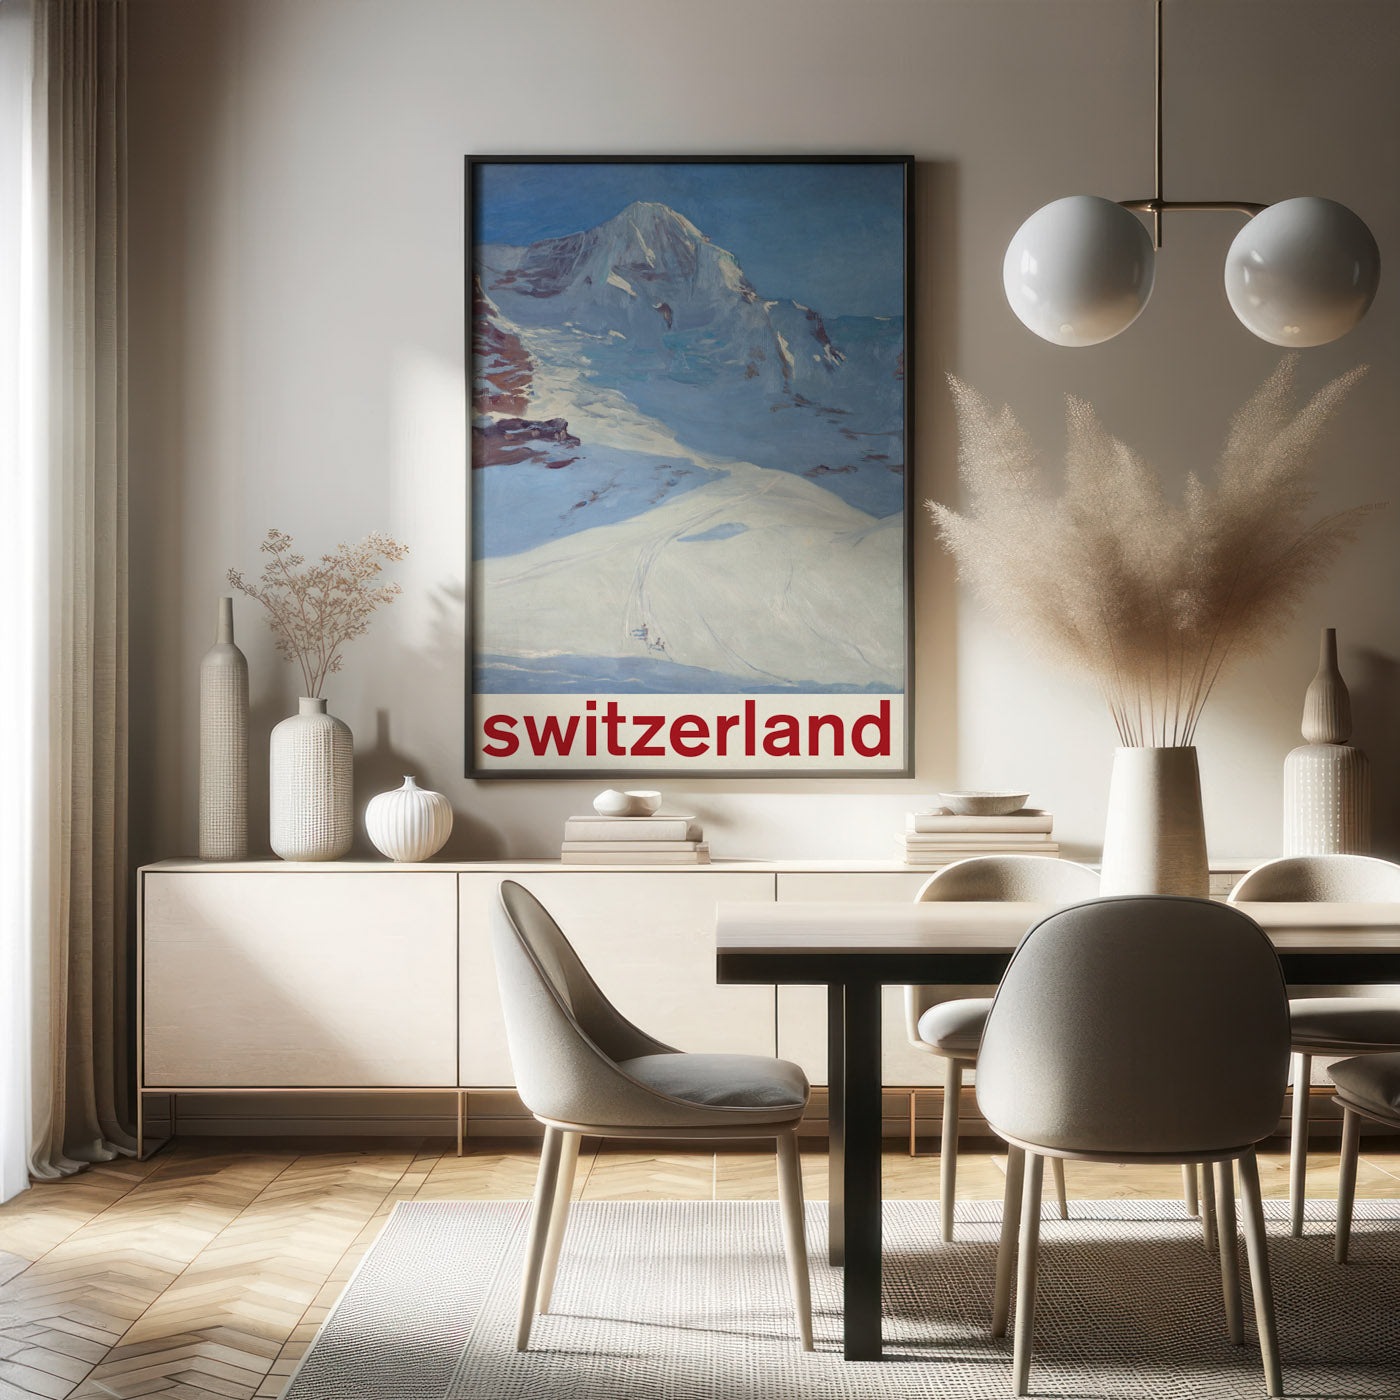 Vintage 1960s Style Switzerland Tourist Poster